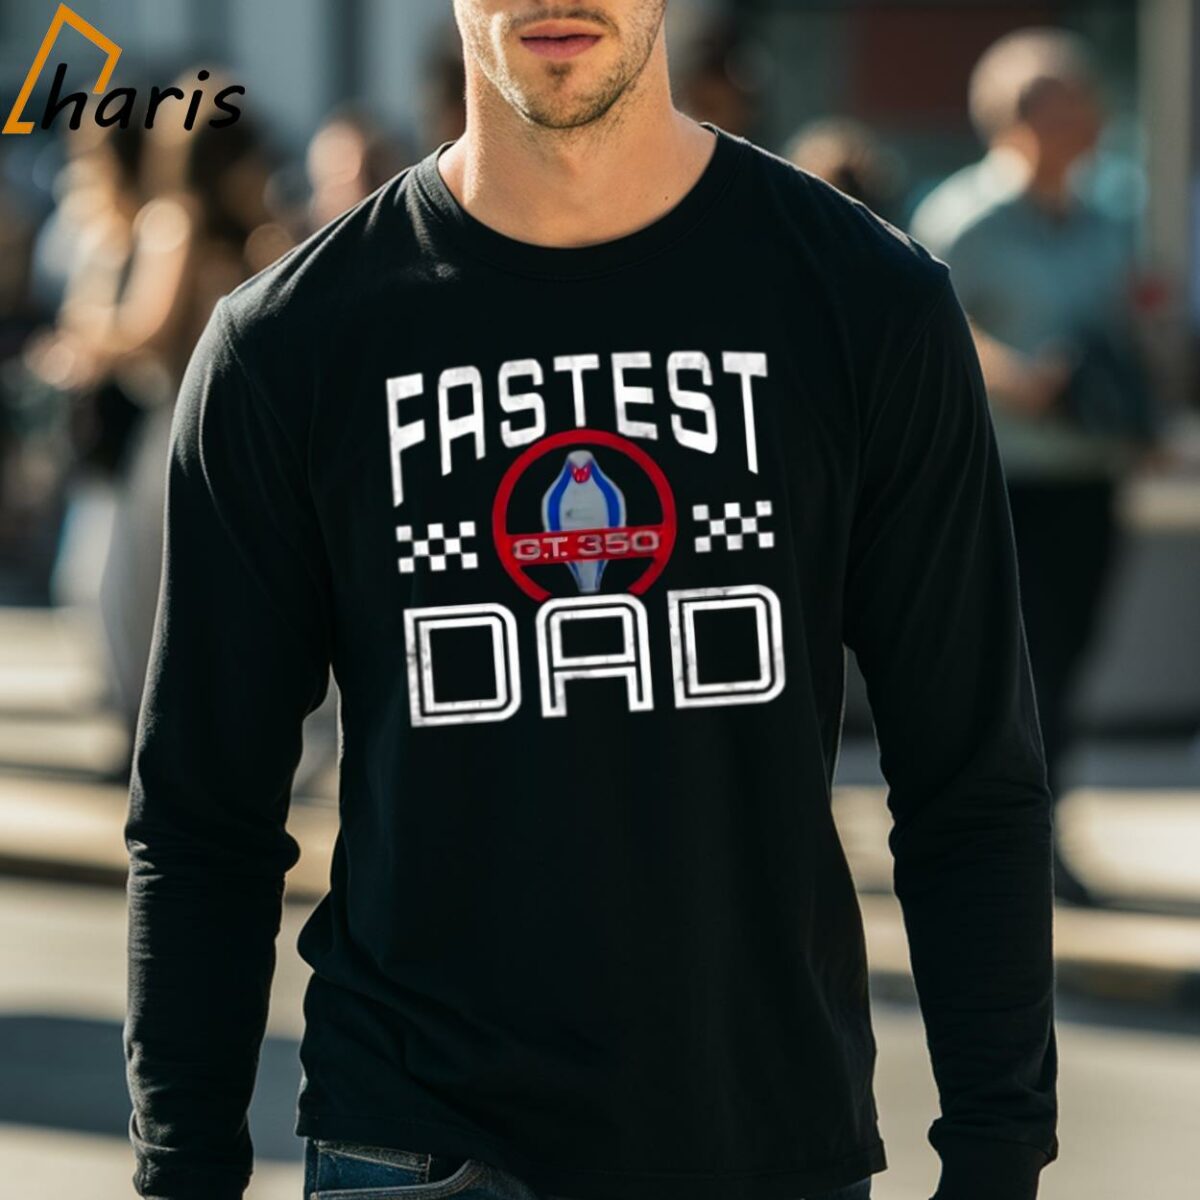 Mens Shelby Cobra Fastest Dad T shirt 4 long sleeve shirt